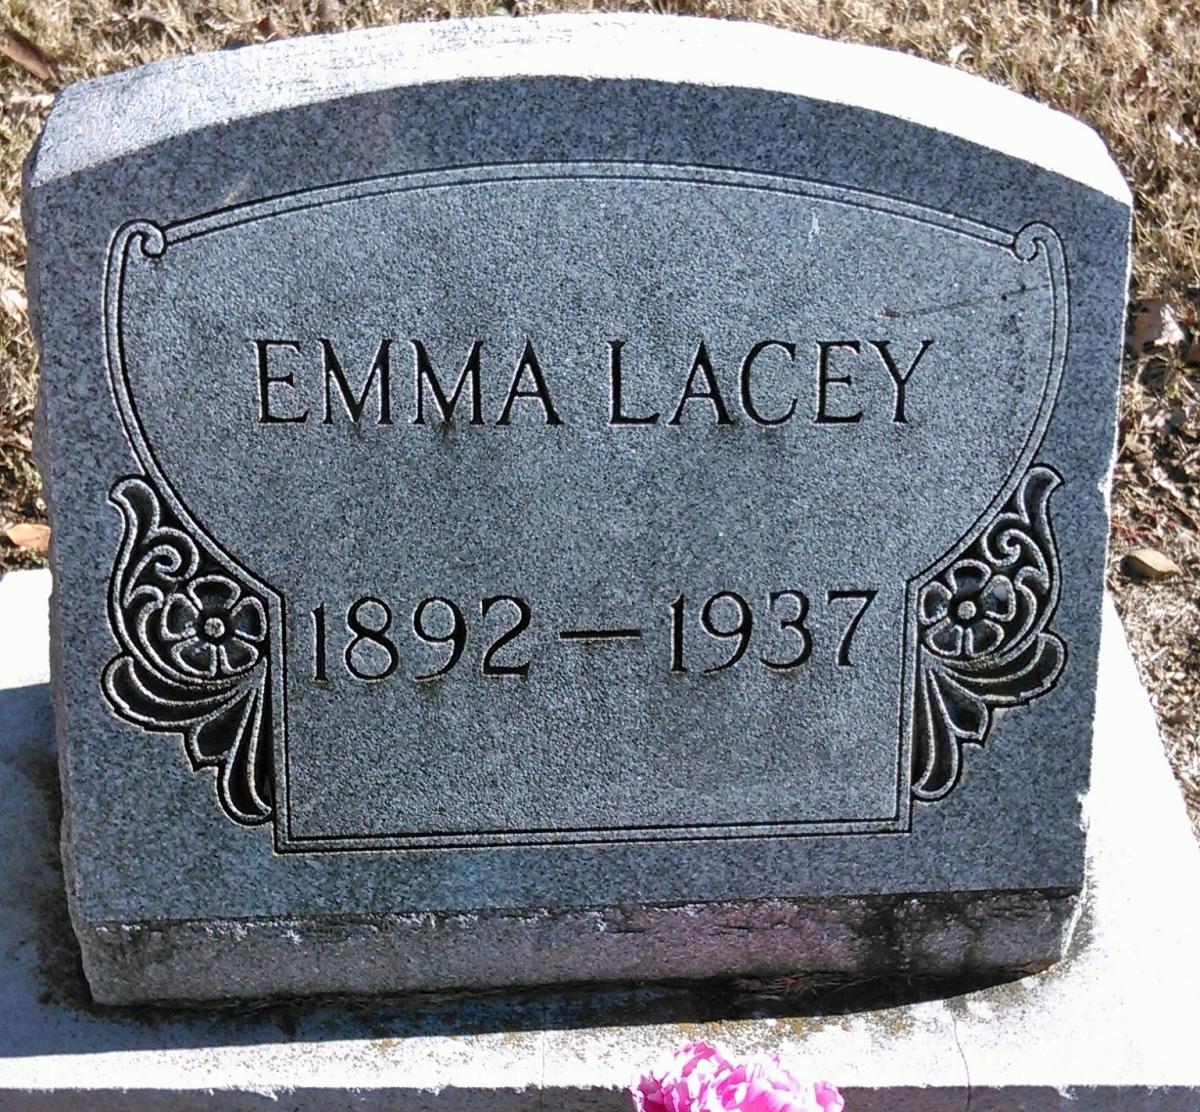 OK, Grove, Buzzard Cemetery, Lacey, Emma Headstone